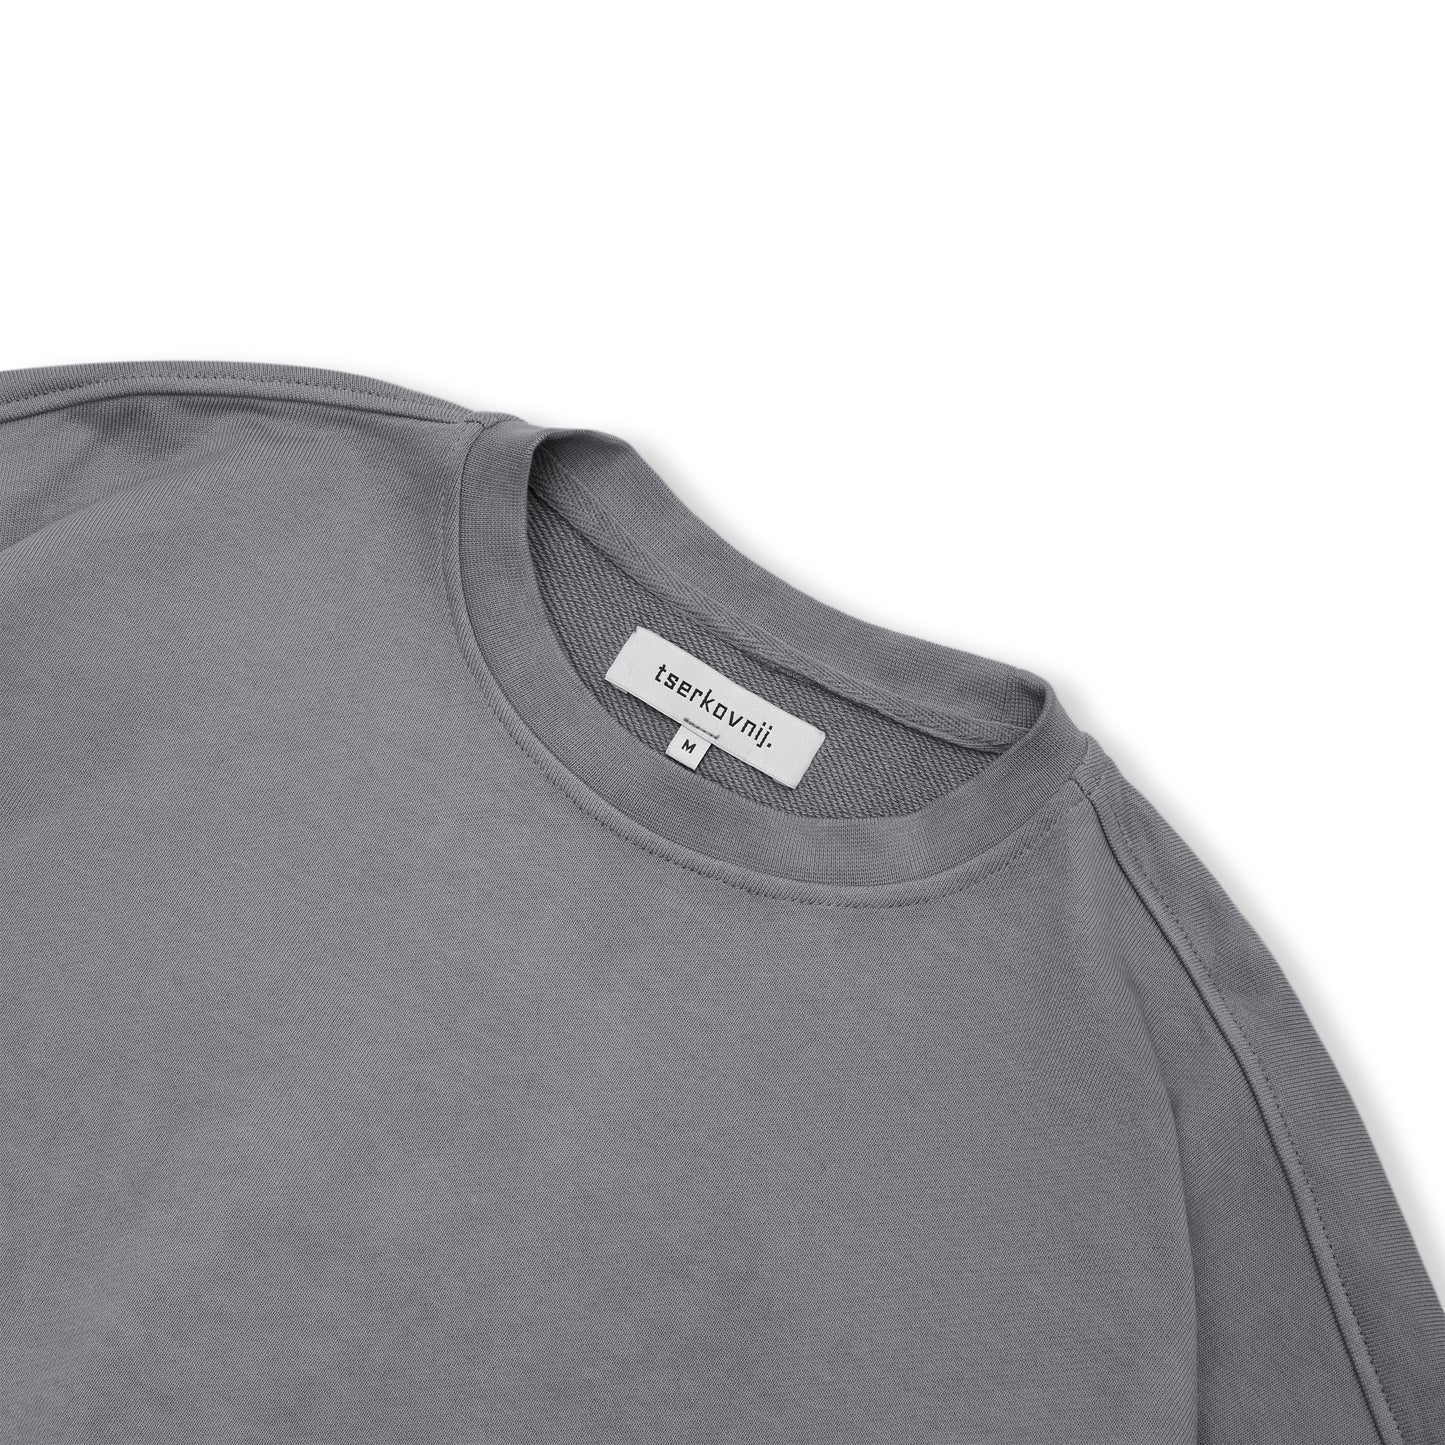 Sweatshirt Box Fit "Gray"